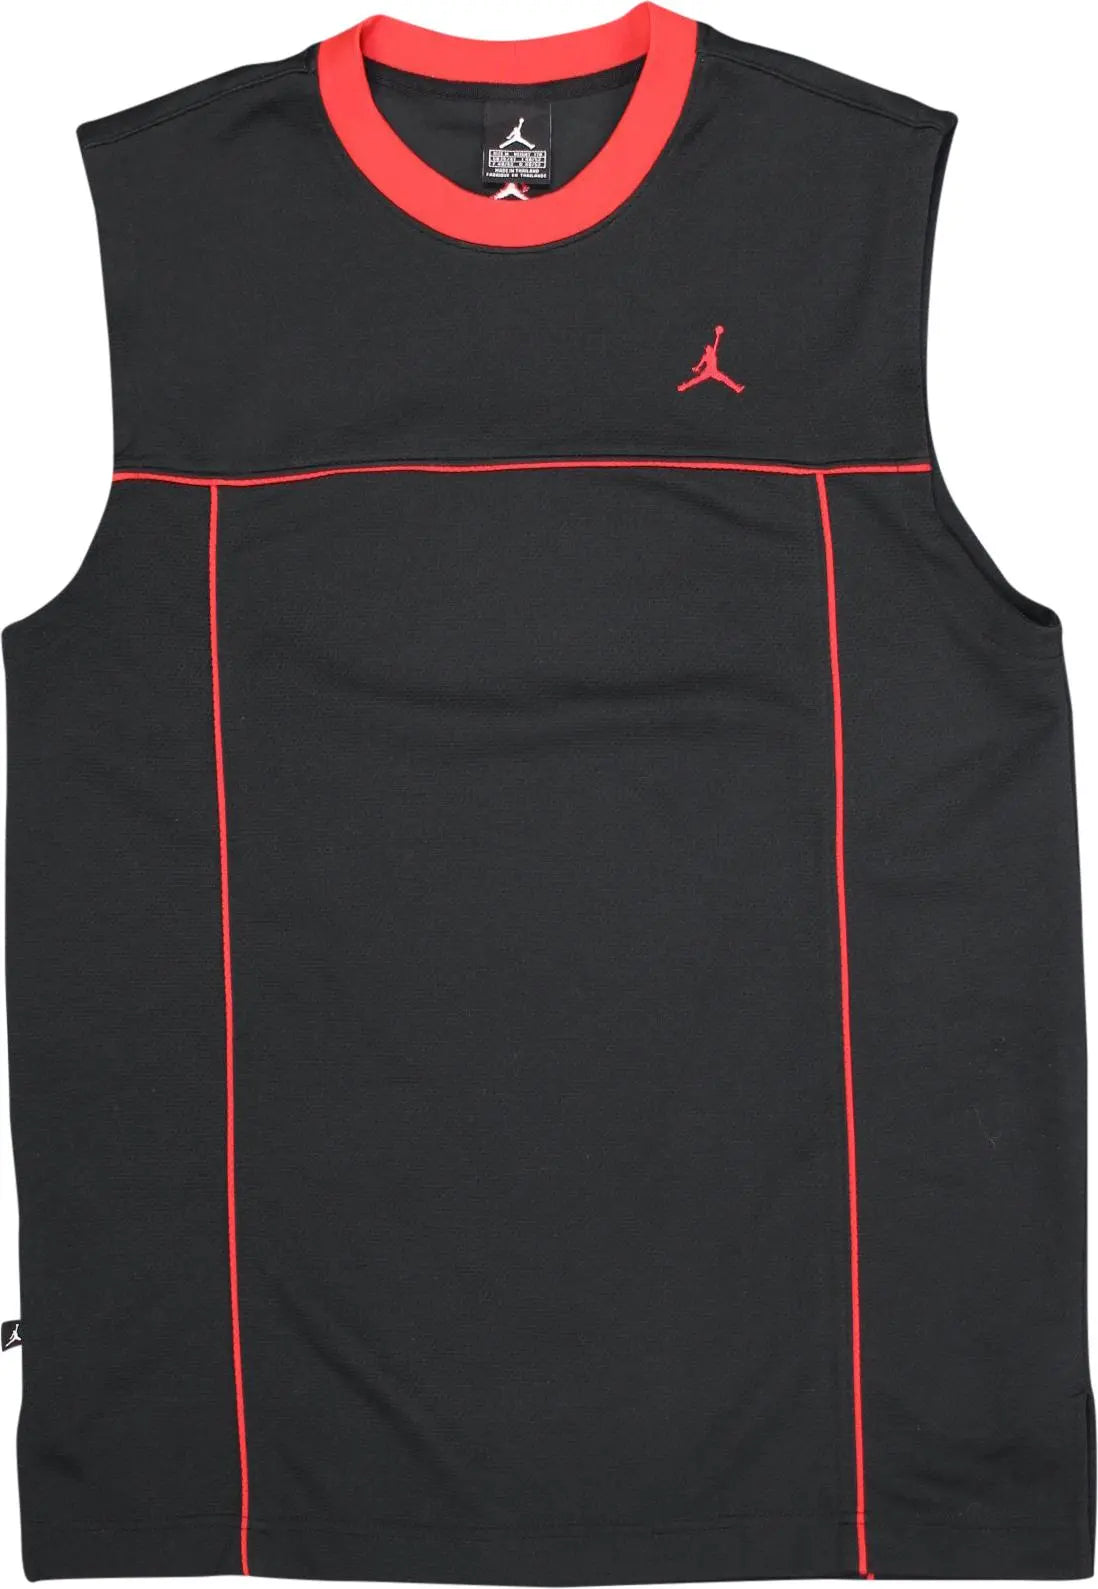 Nike - Nike Jordan Basketball Shirt- ThriftTale.com - Vintage and second handclothing